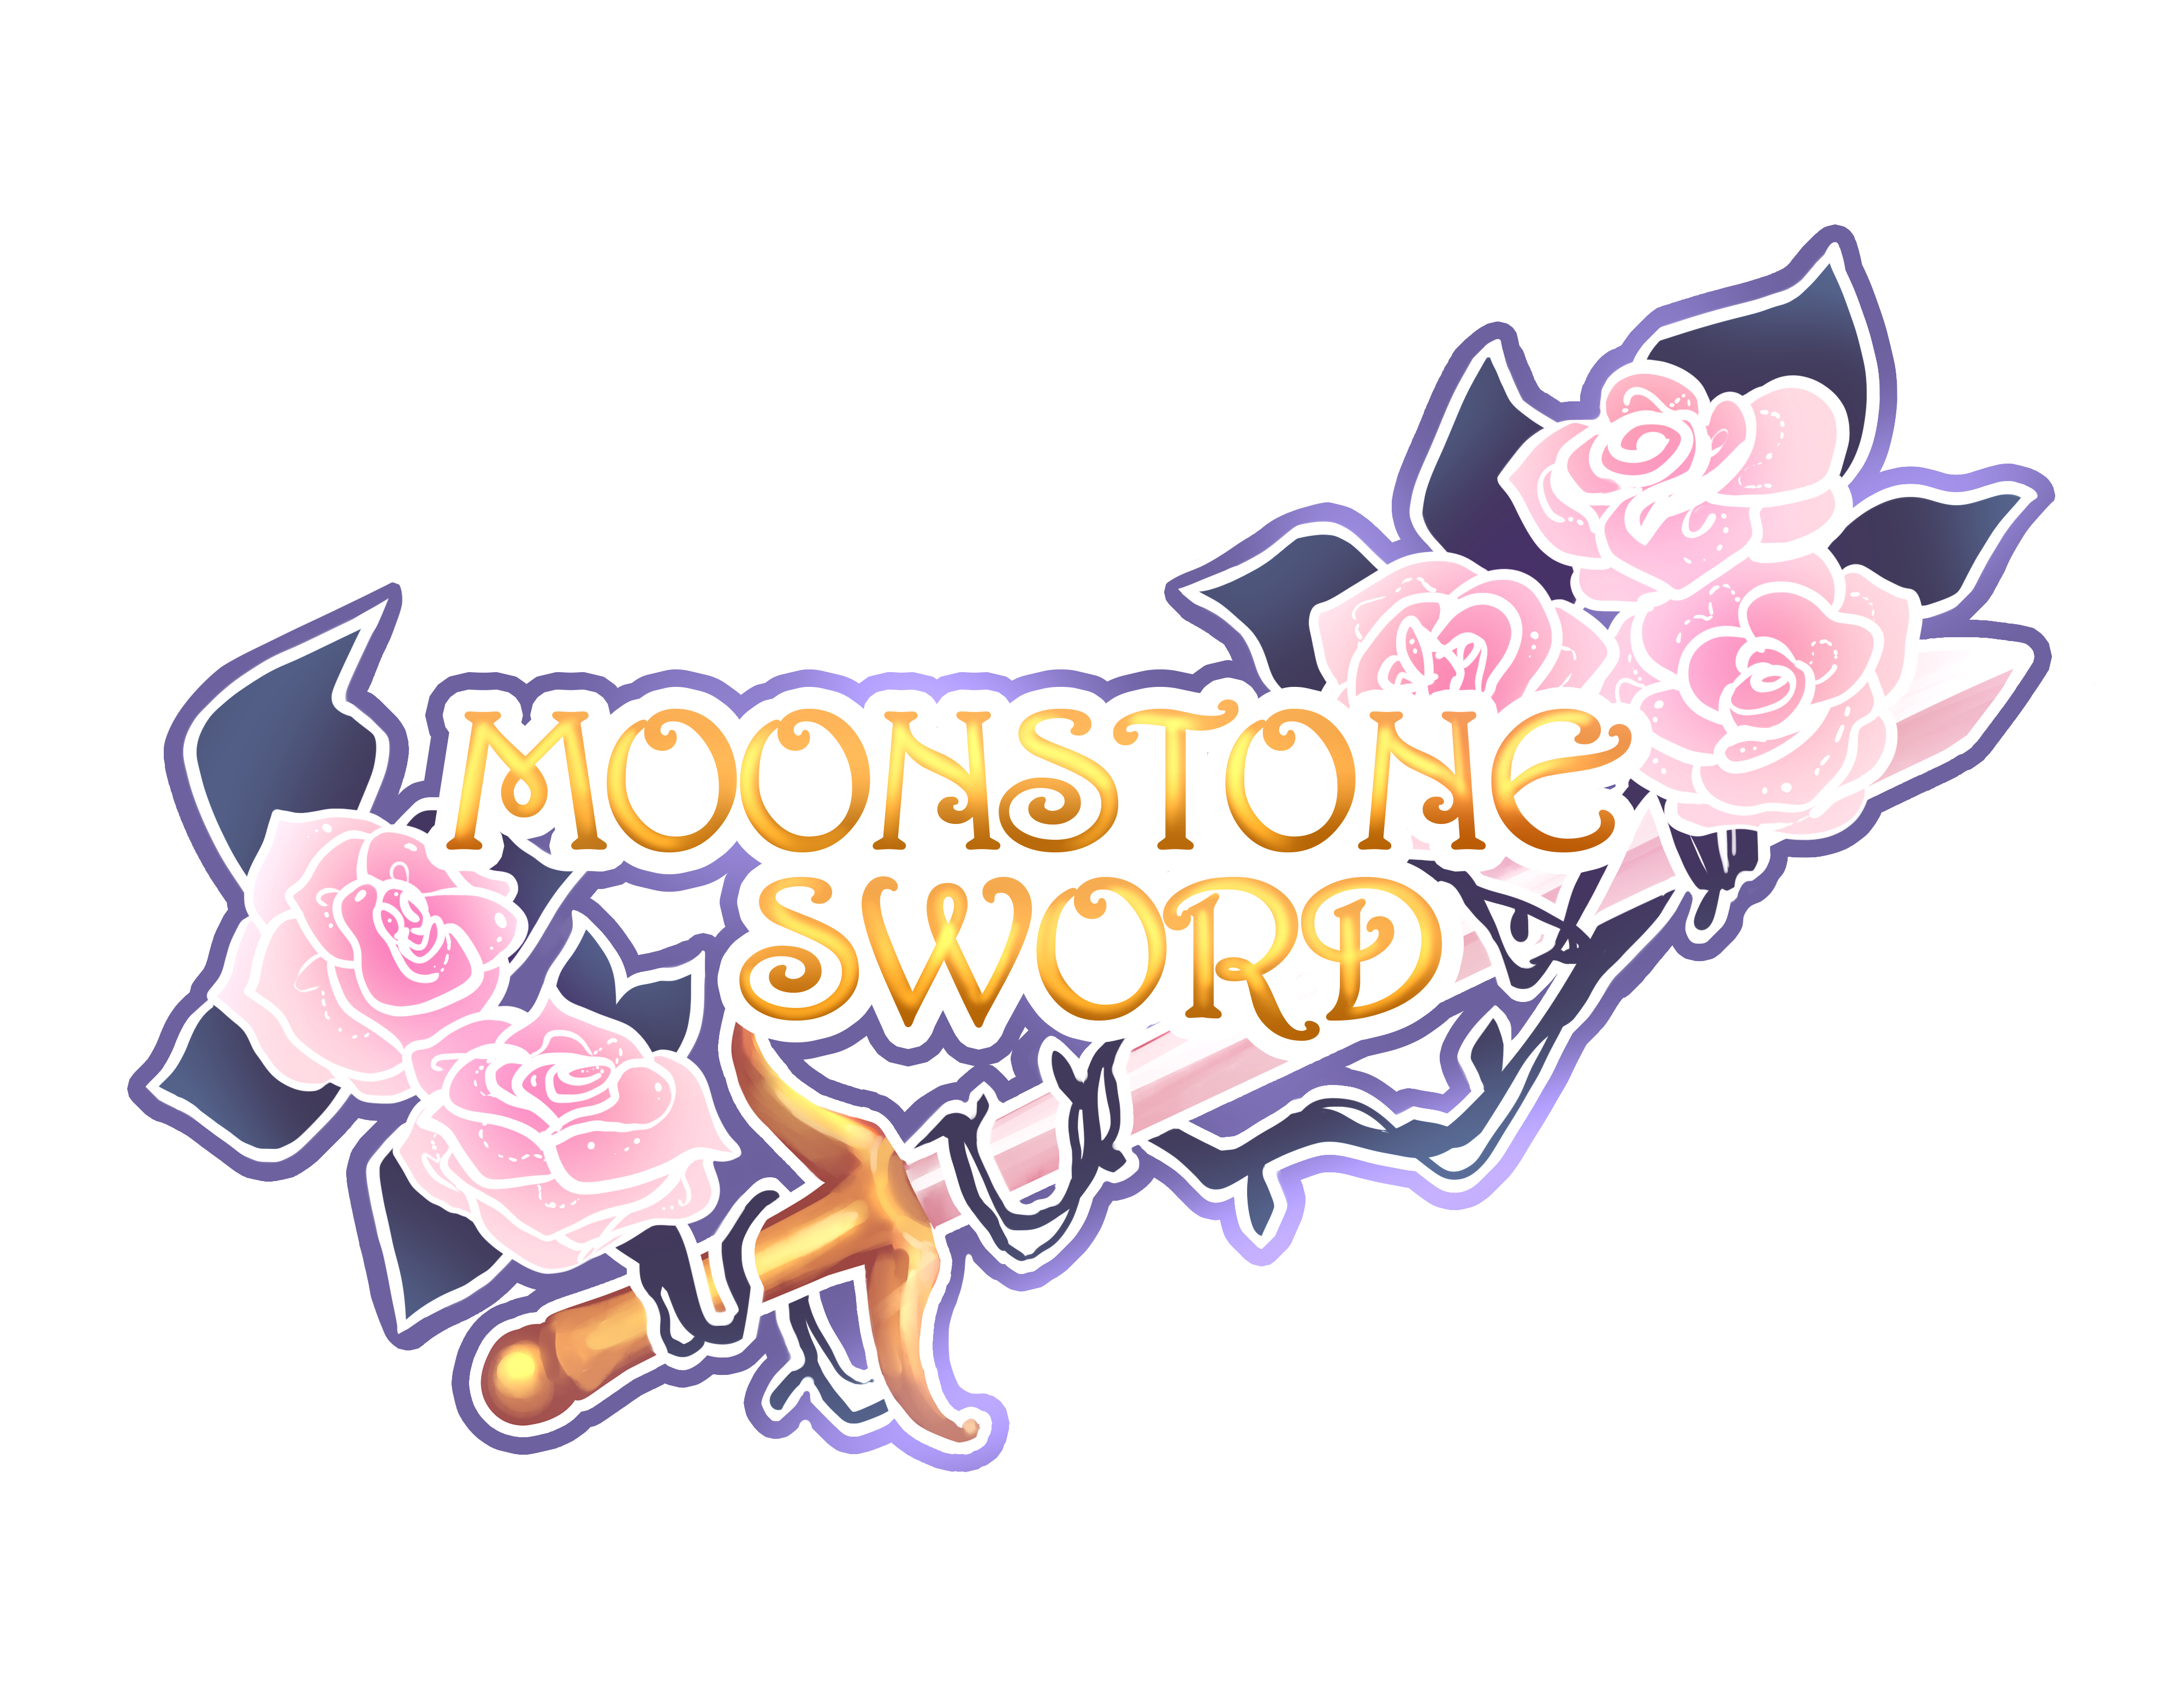 Moonstone Sword